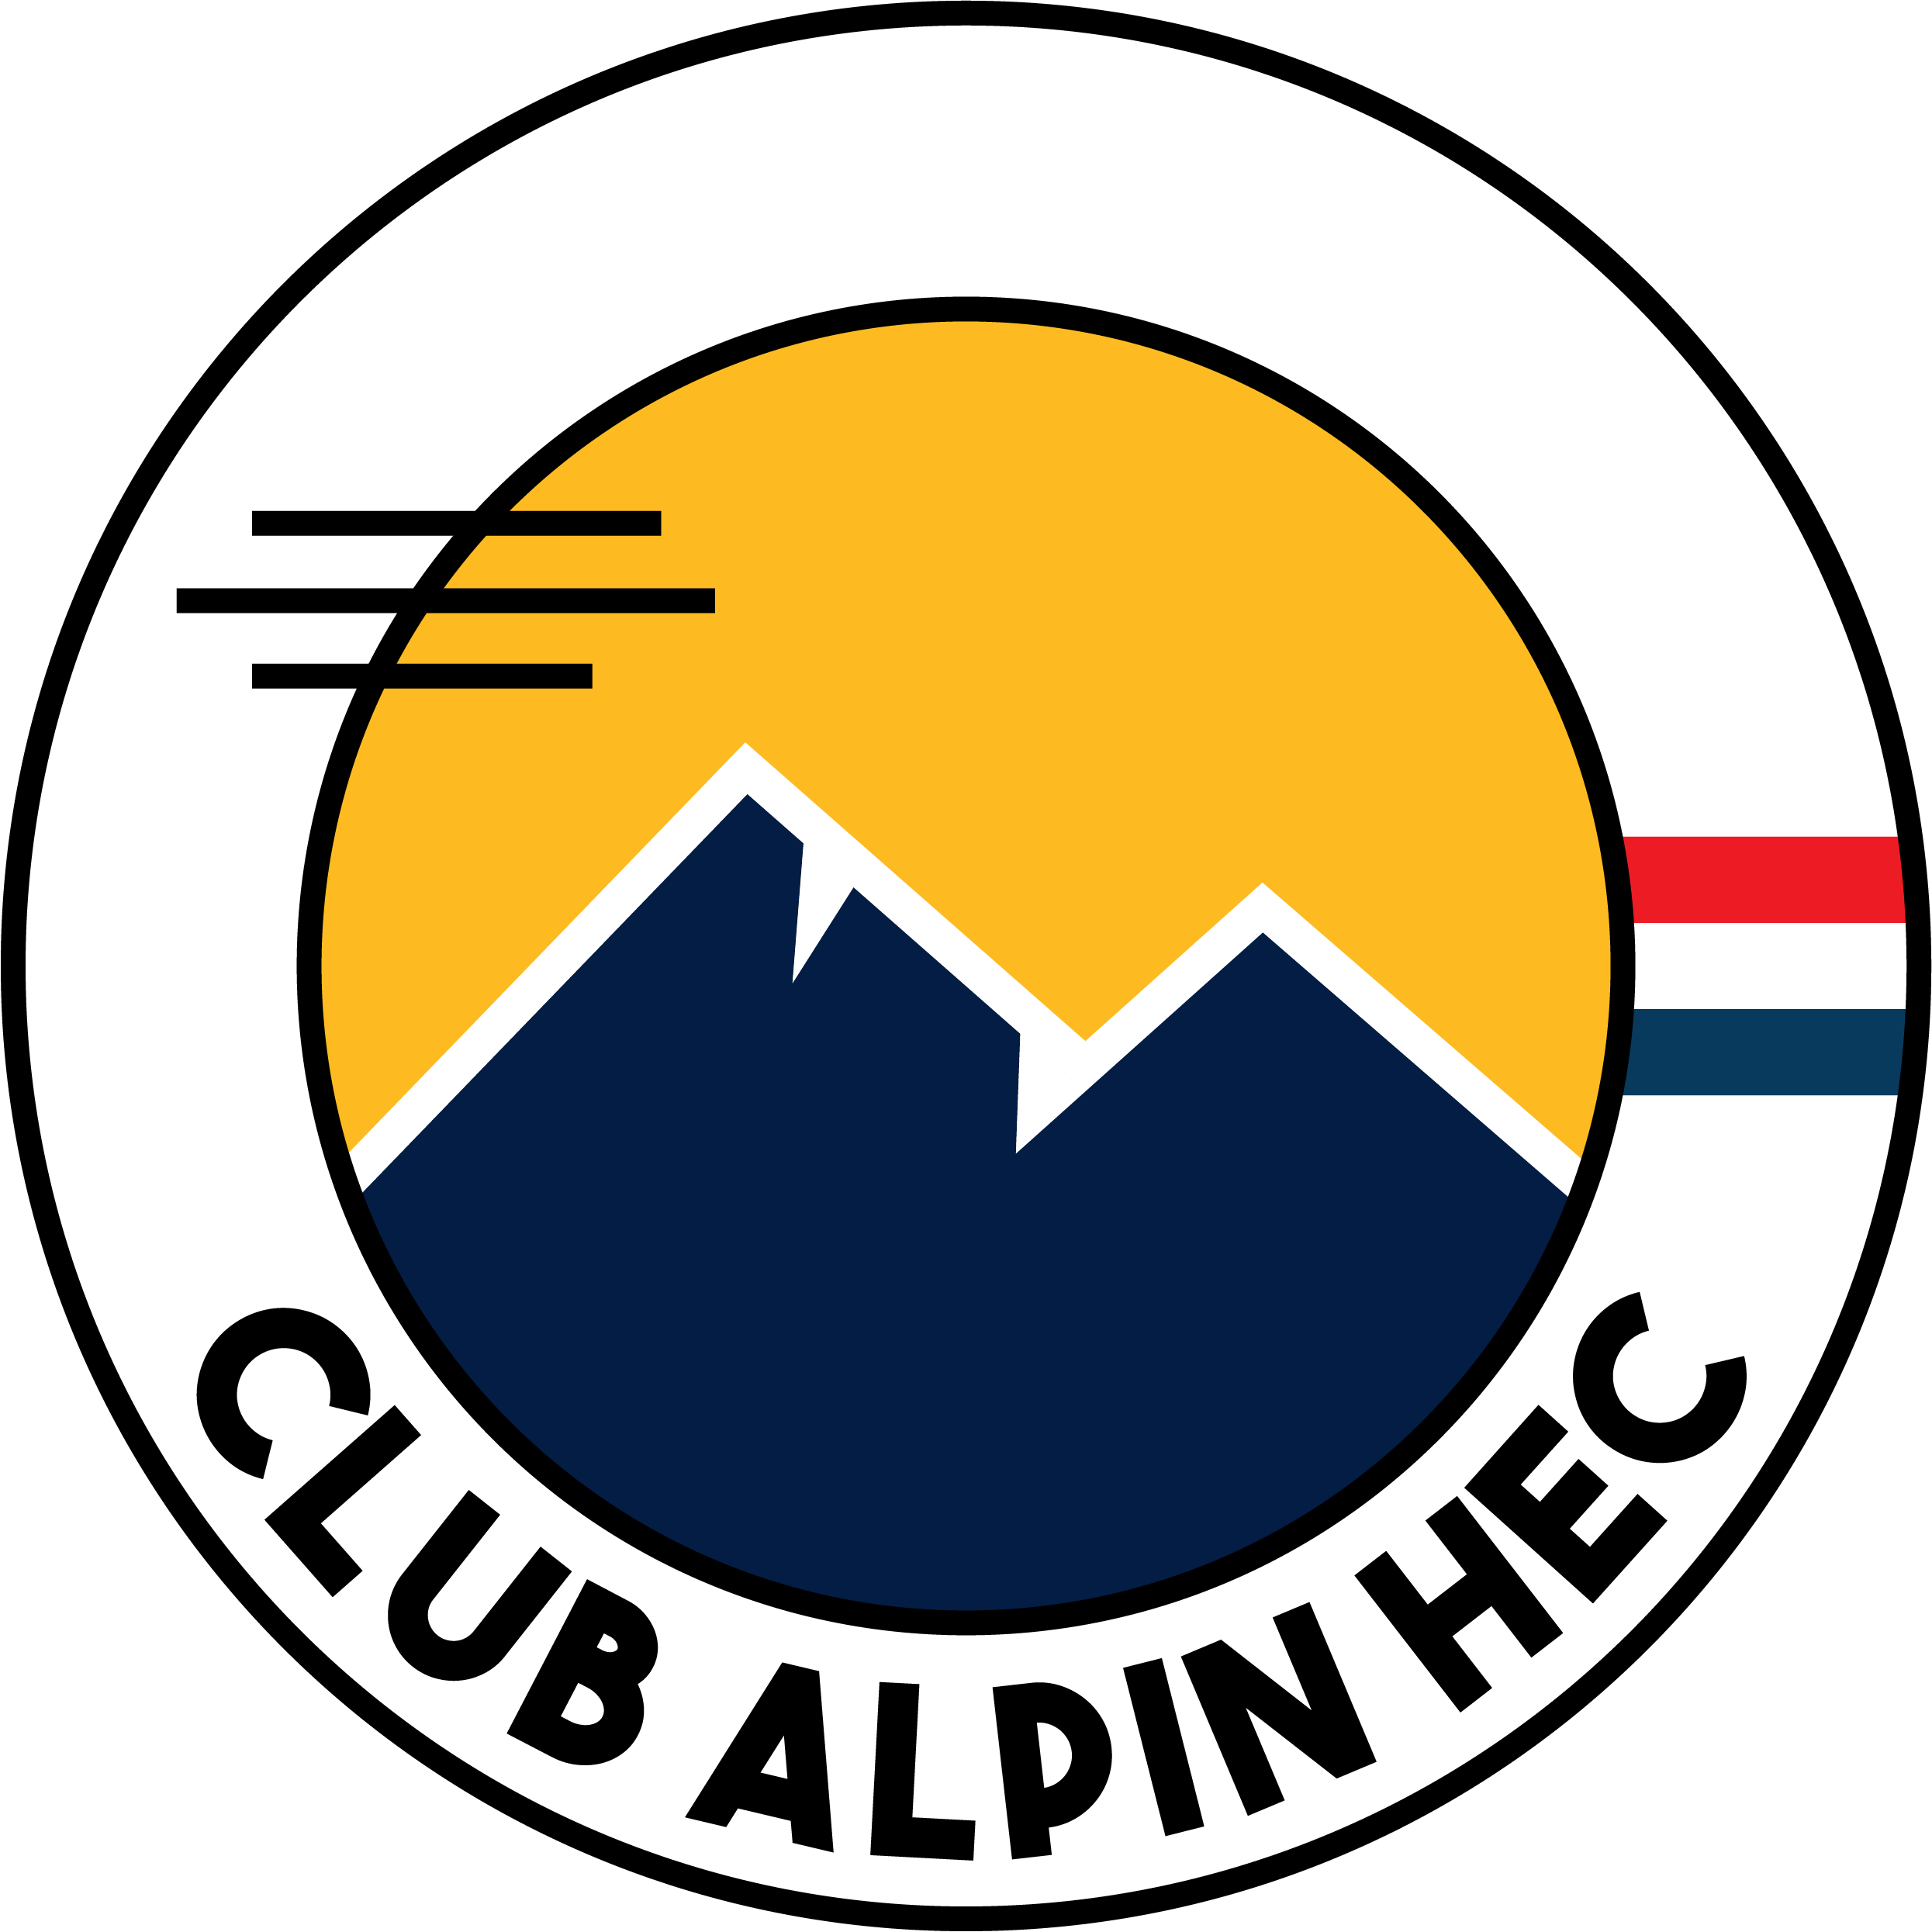 CLUB ALPIN HEC LOGO